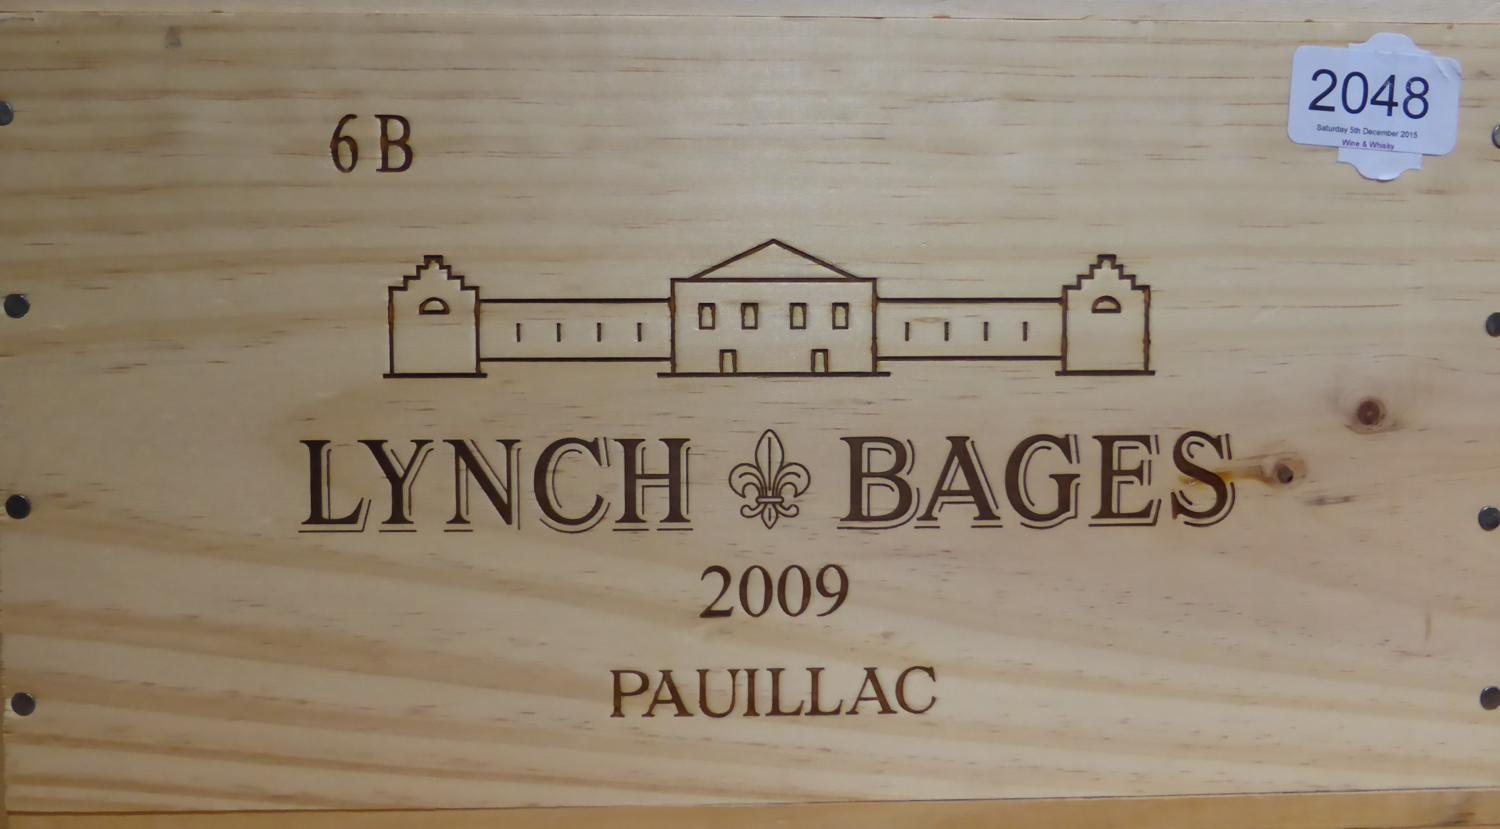 Chateau Lynch Bages 2009, Pauillac, half case, owc (six bottles)